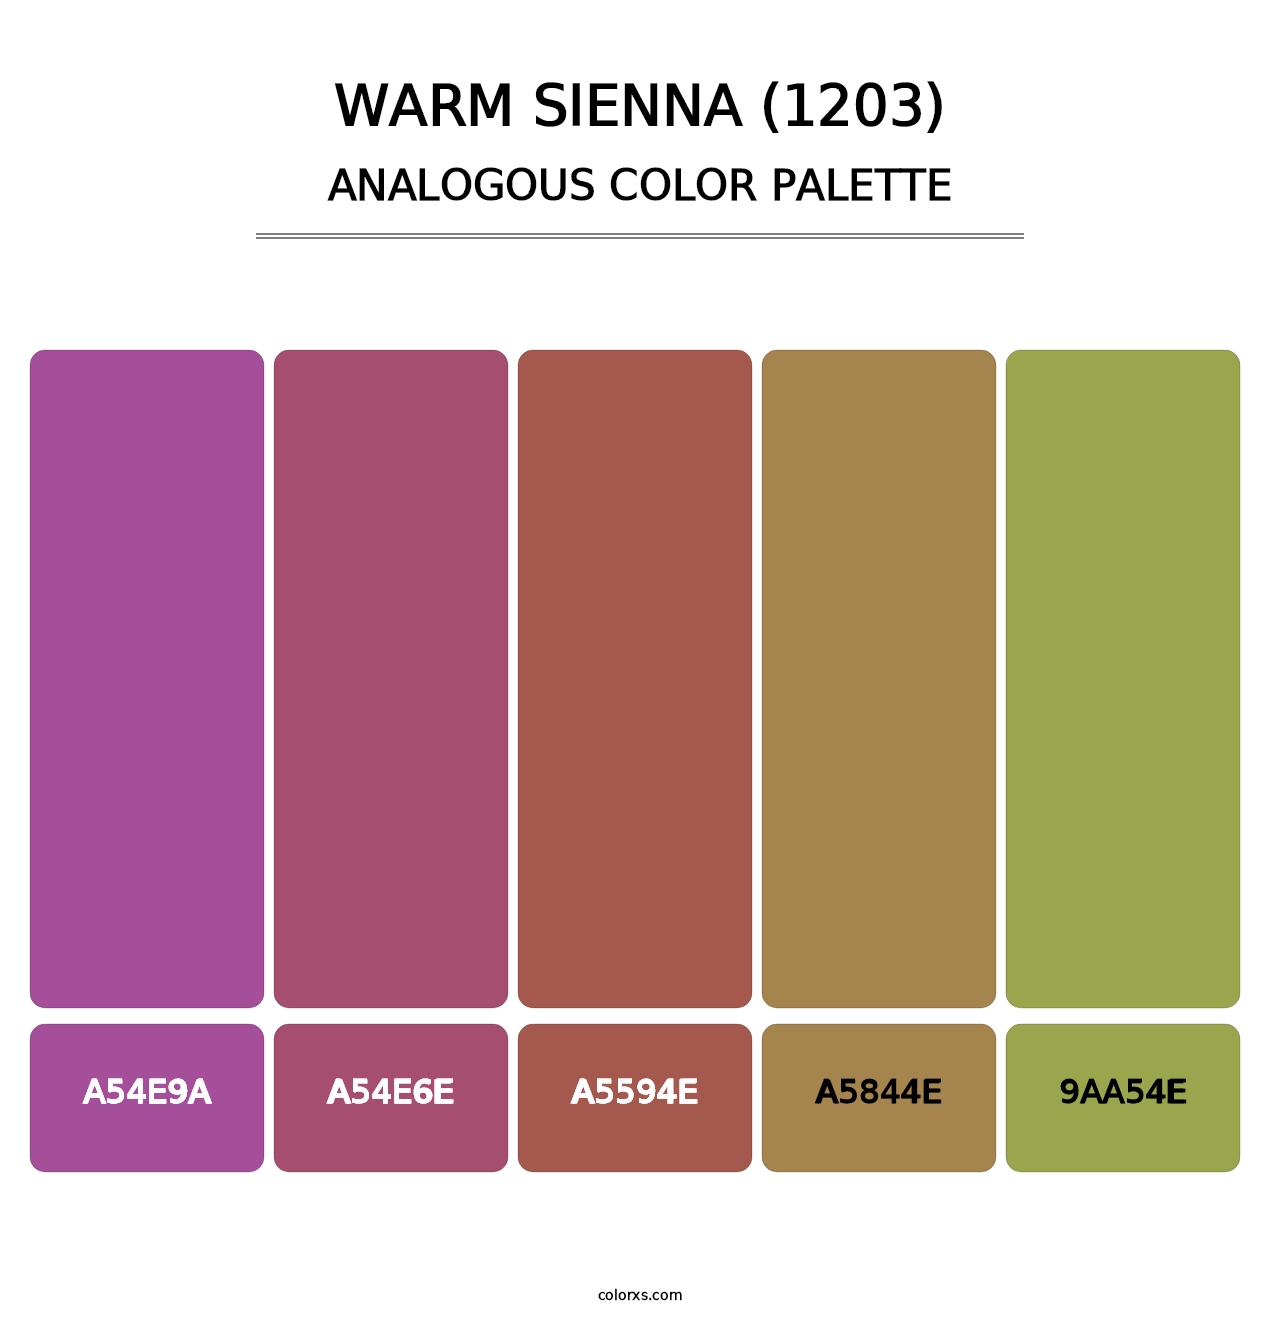 Warm Sienna (1203) - Analogous Color Palette